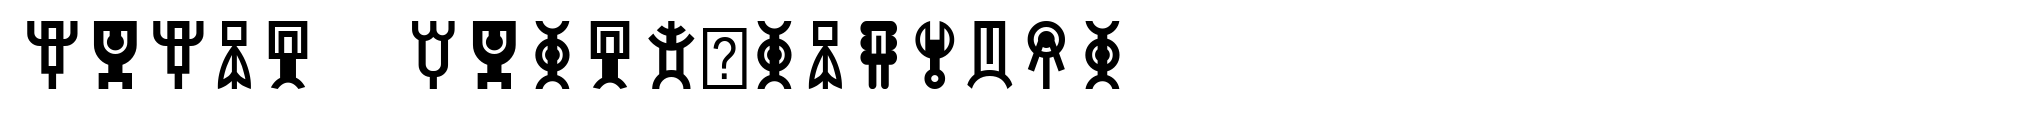 Totem Forms-Regular image